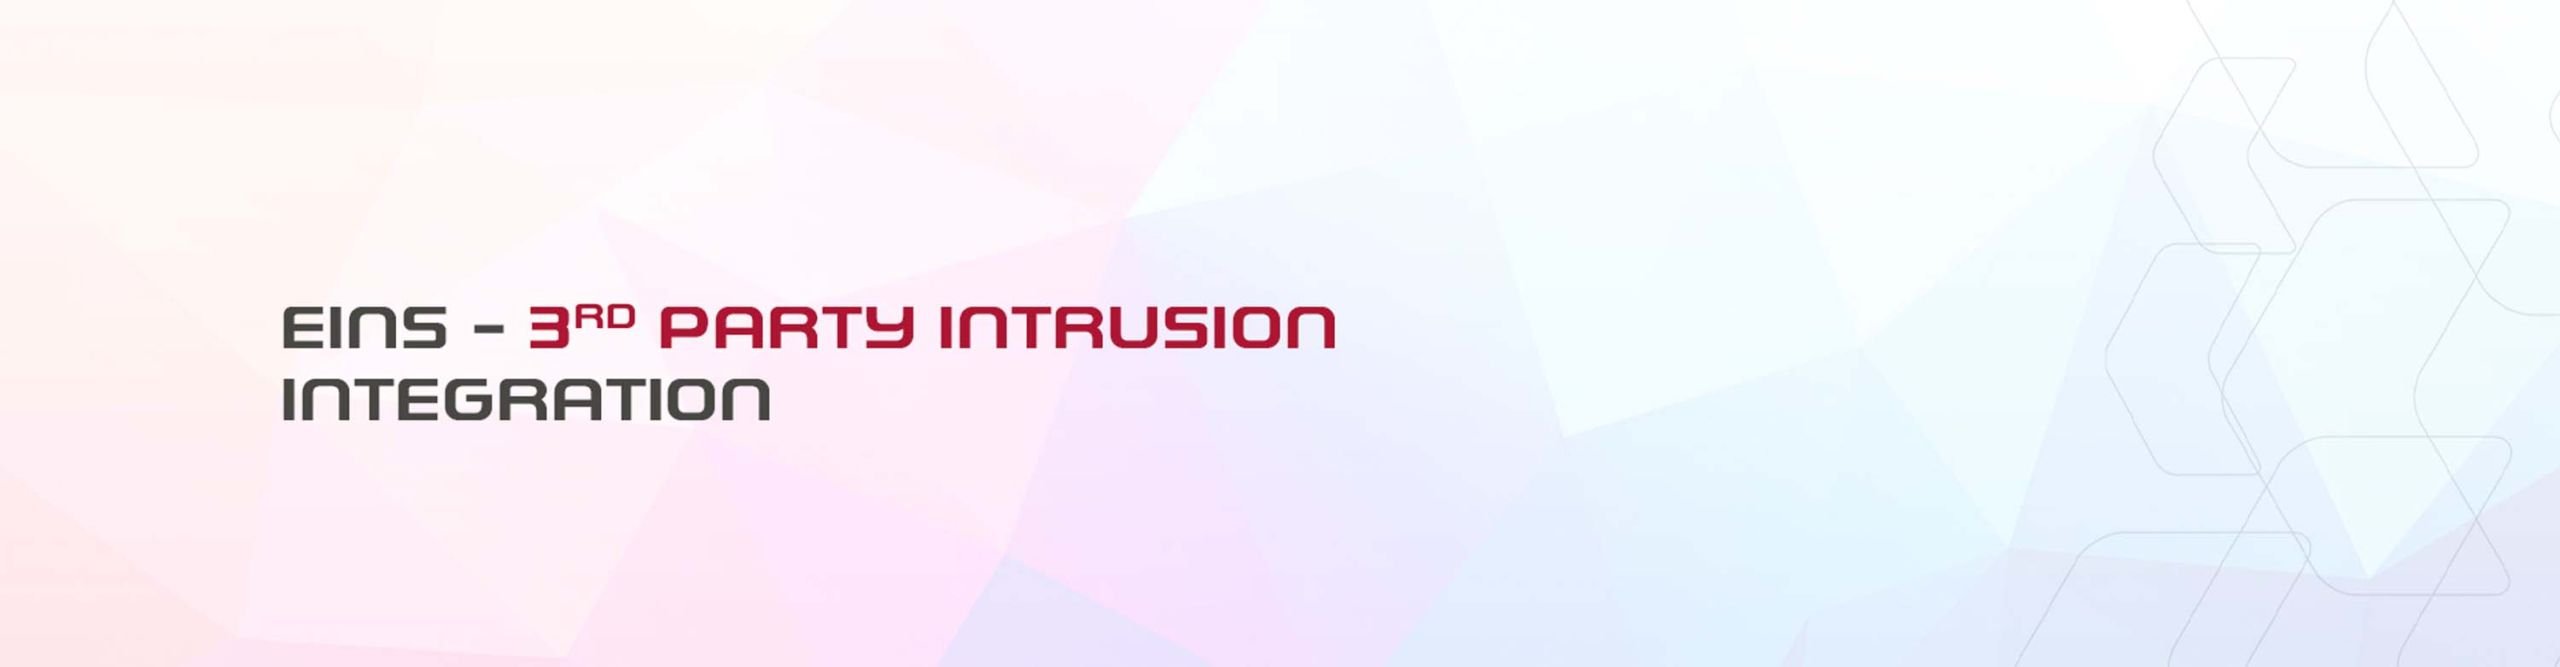 EINS - 3rd party intrusion integration